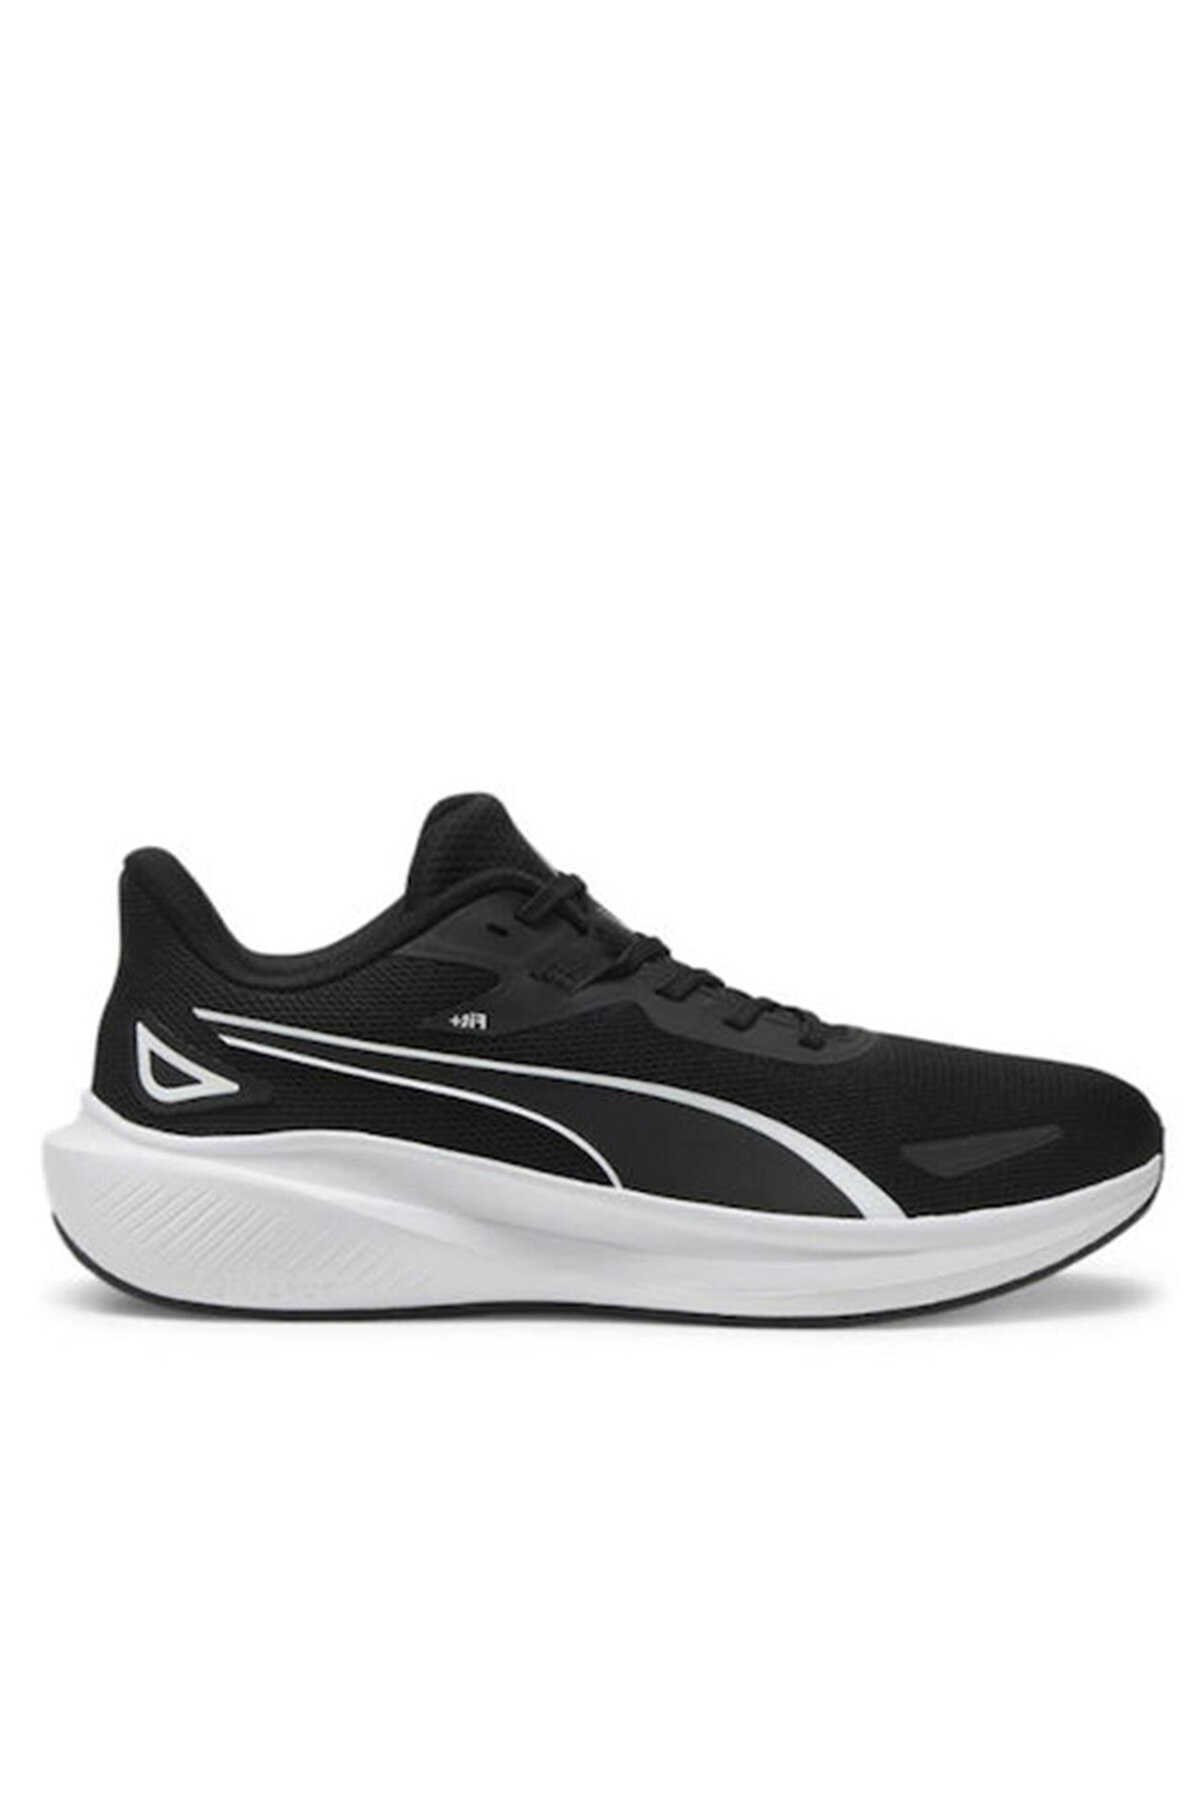 Puma - Puma Skyrocket Lite Erkek Sneaker Ayakkabı Siyah / Beyaz